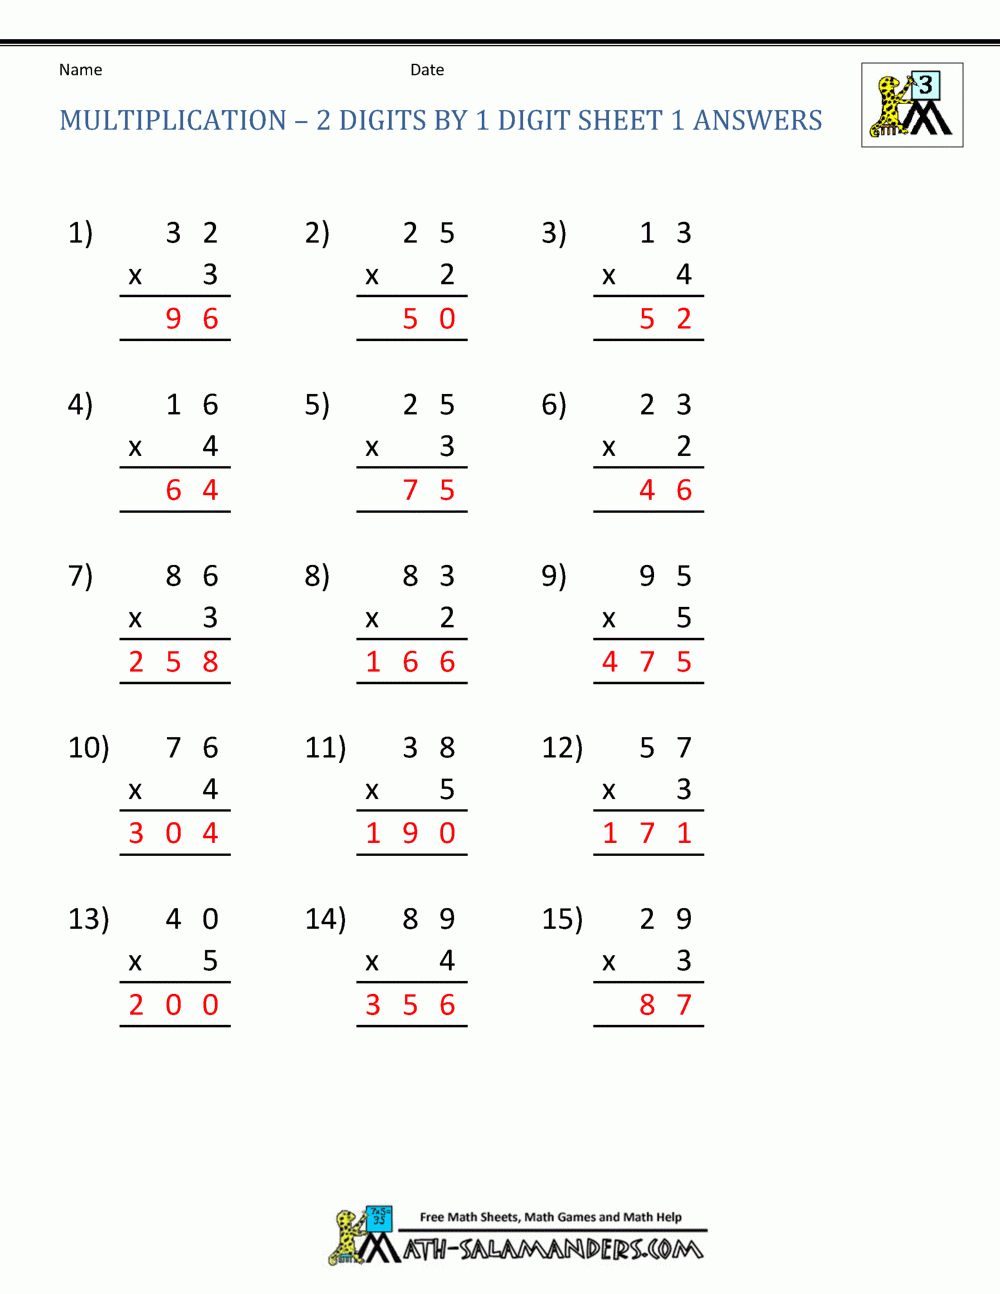 Multiplication Practice Worksheets Grade 3 pertaining to Multiplication Worksheets Year 3 Pdf